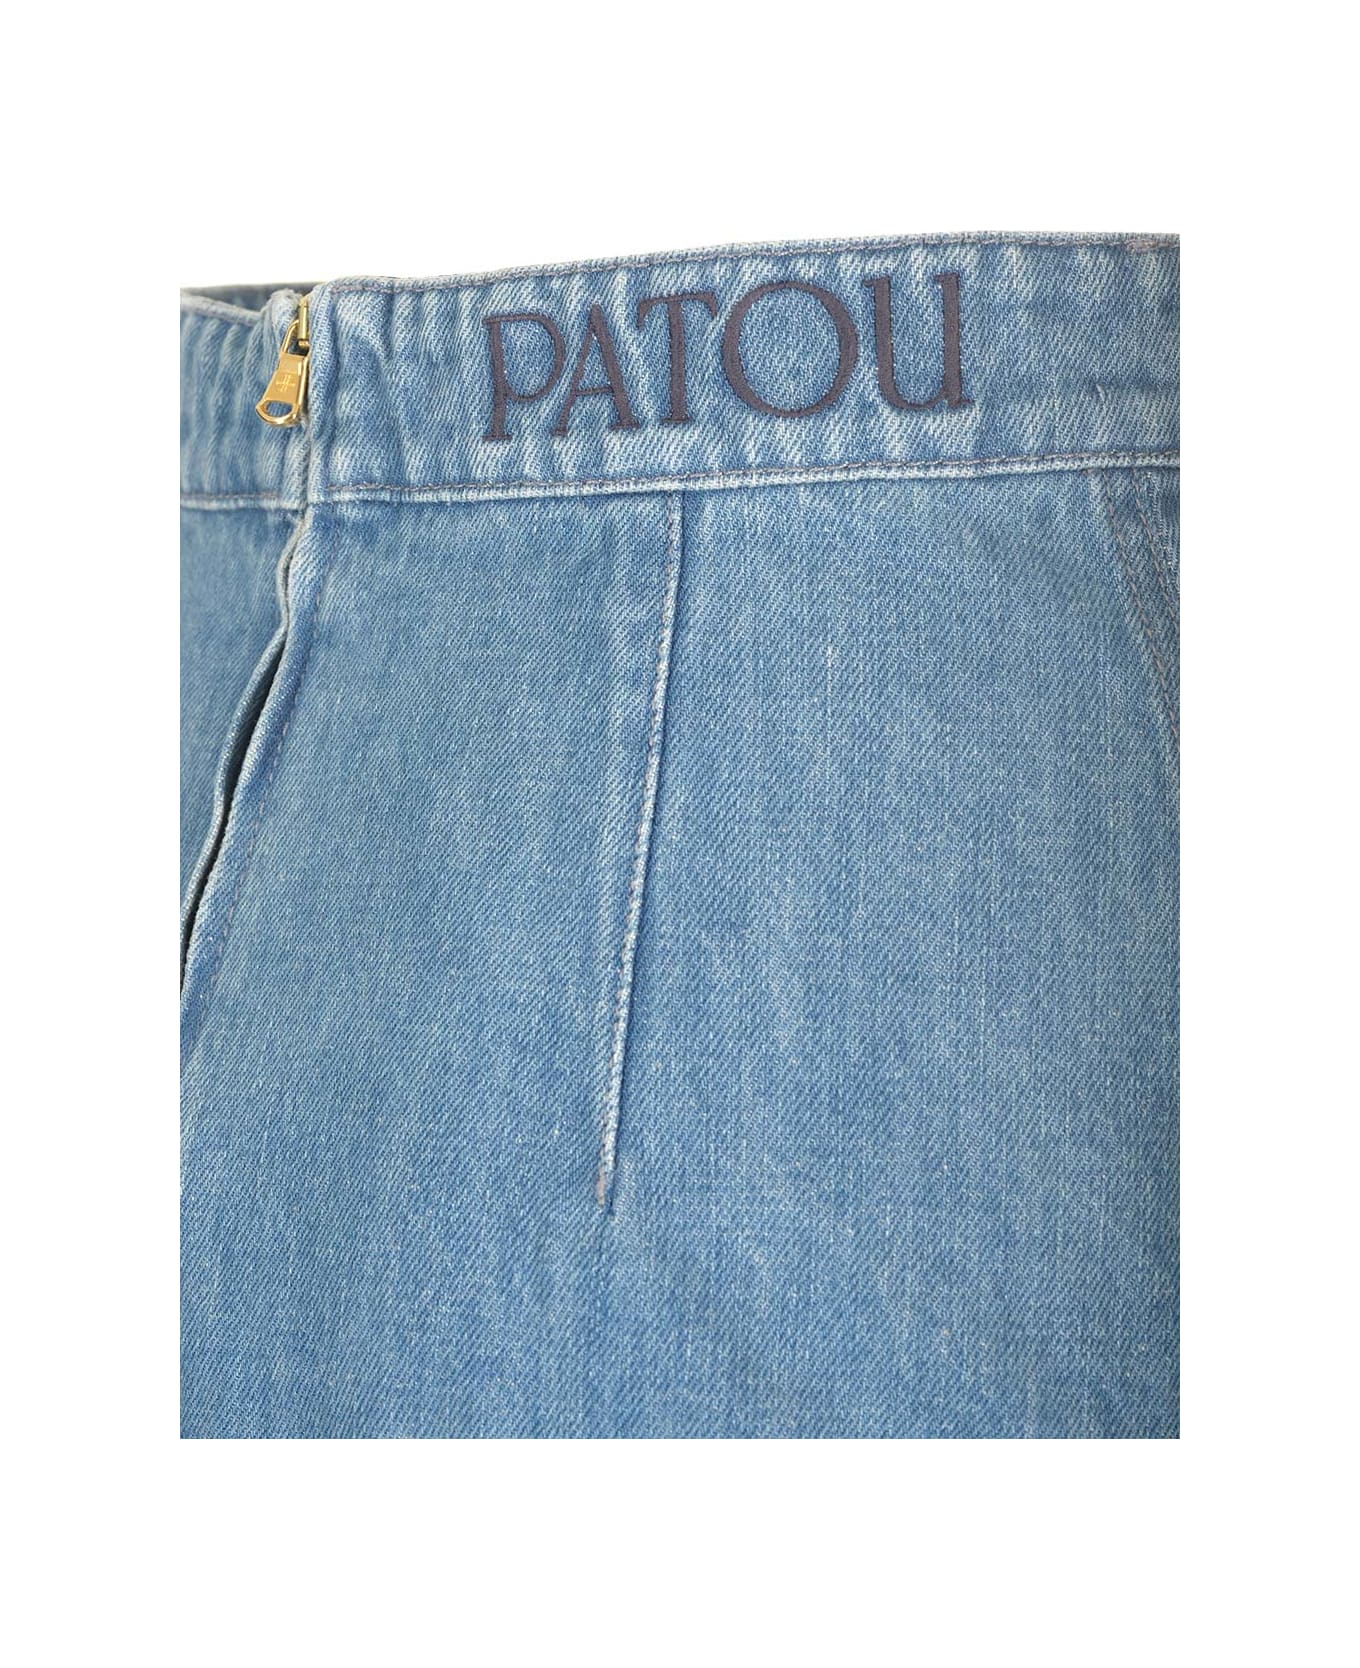 Patou Medium Blue Denim Miniskirt - Ice blue